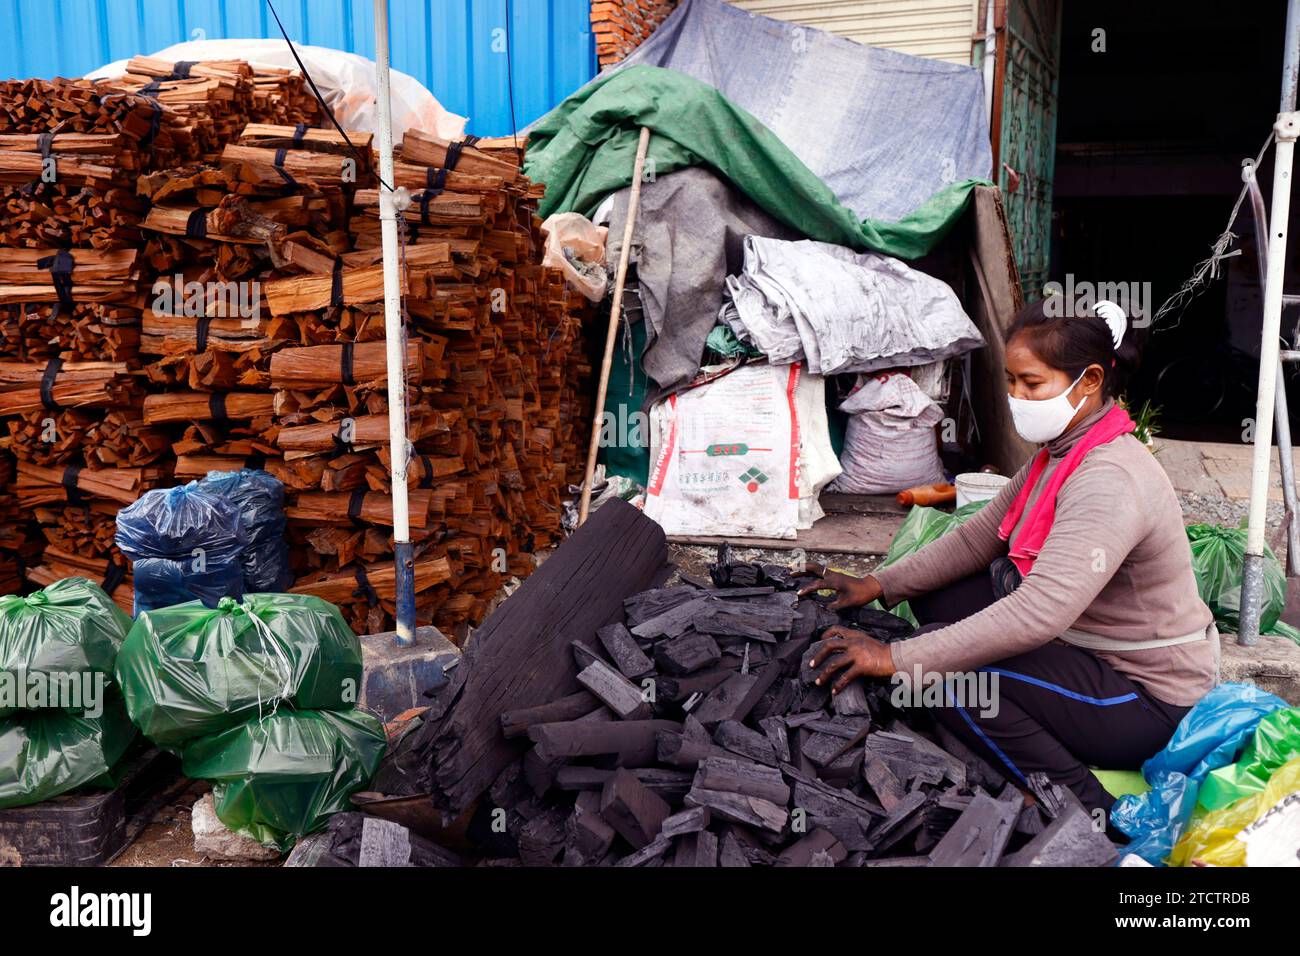 Woman making wooden charcoal. Hard work. Stock Photo